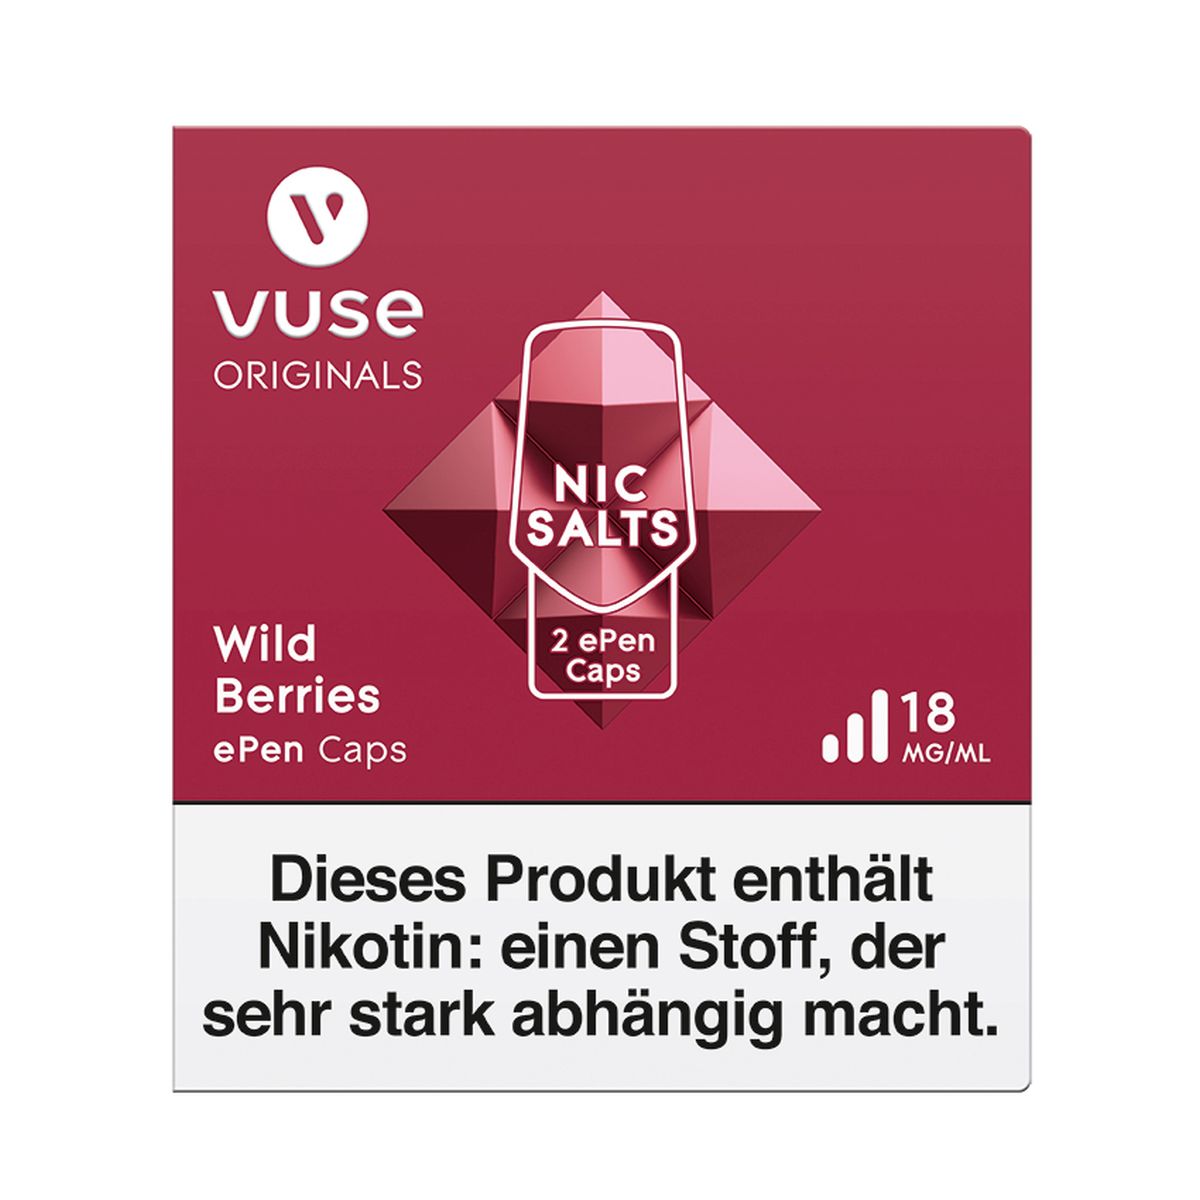 Vuse Vuse ePen Caps Wild Berries Nic Salts 18mg Nikotin 2ml bei www.Tabakring.de kaufen